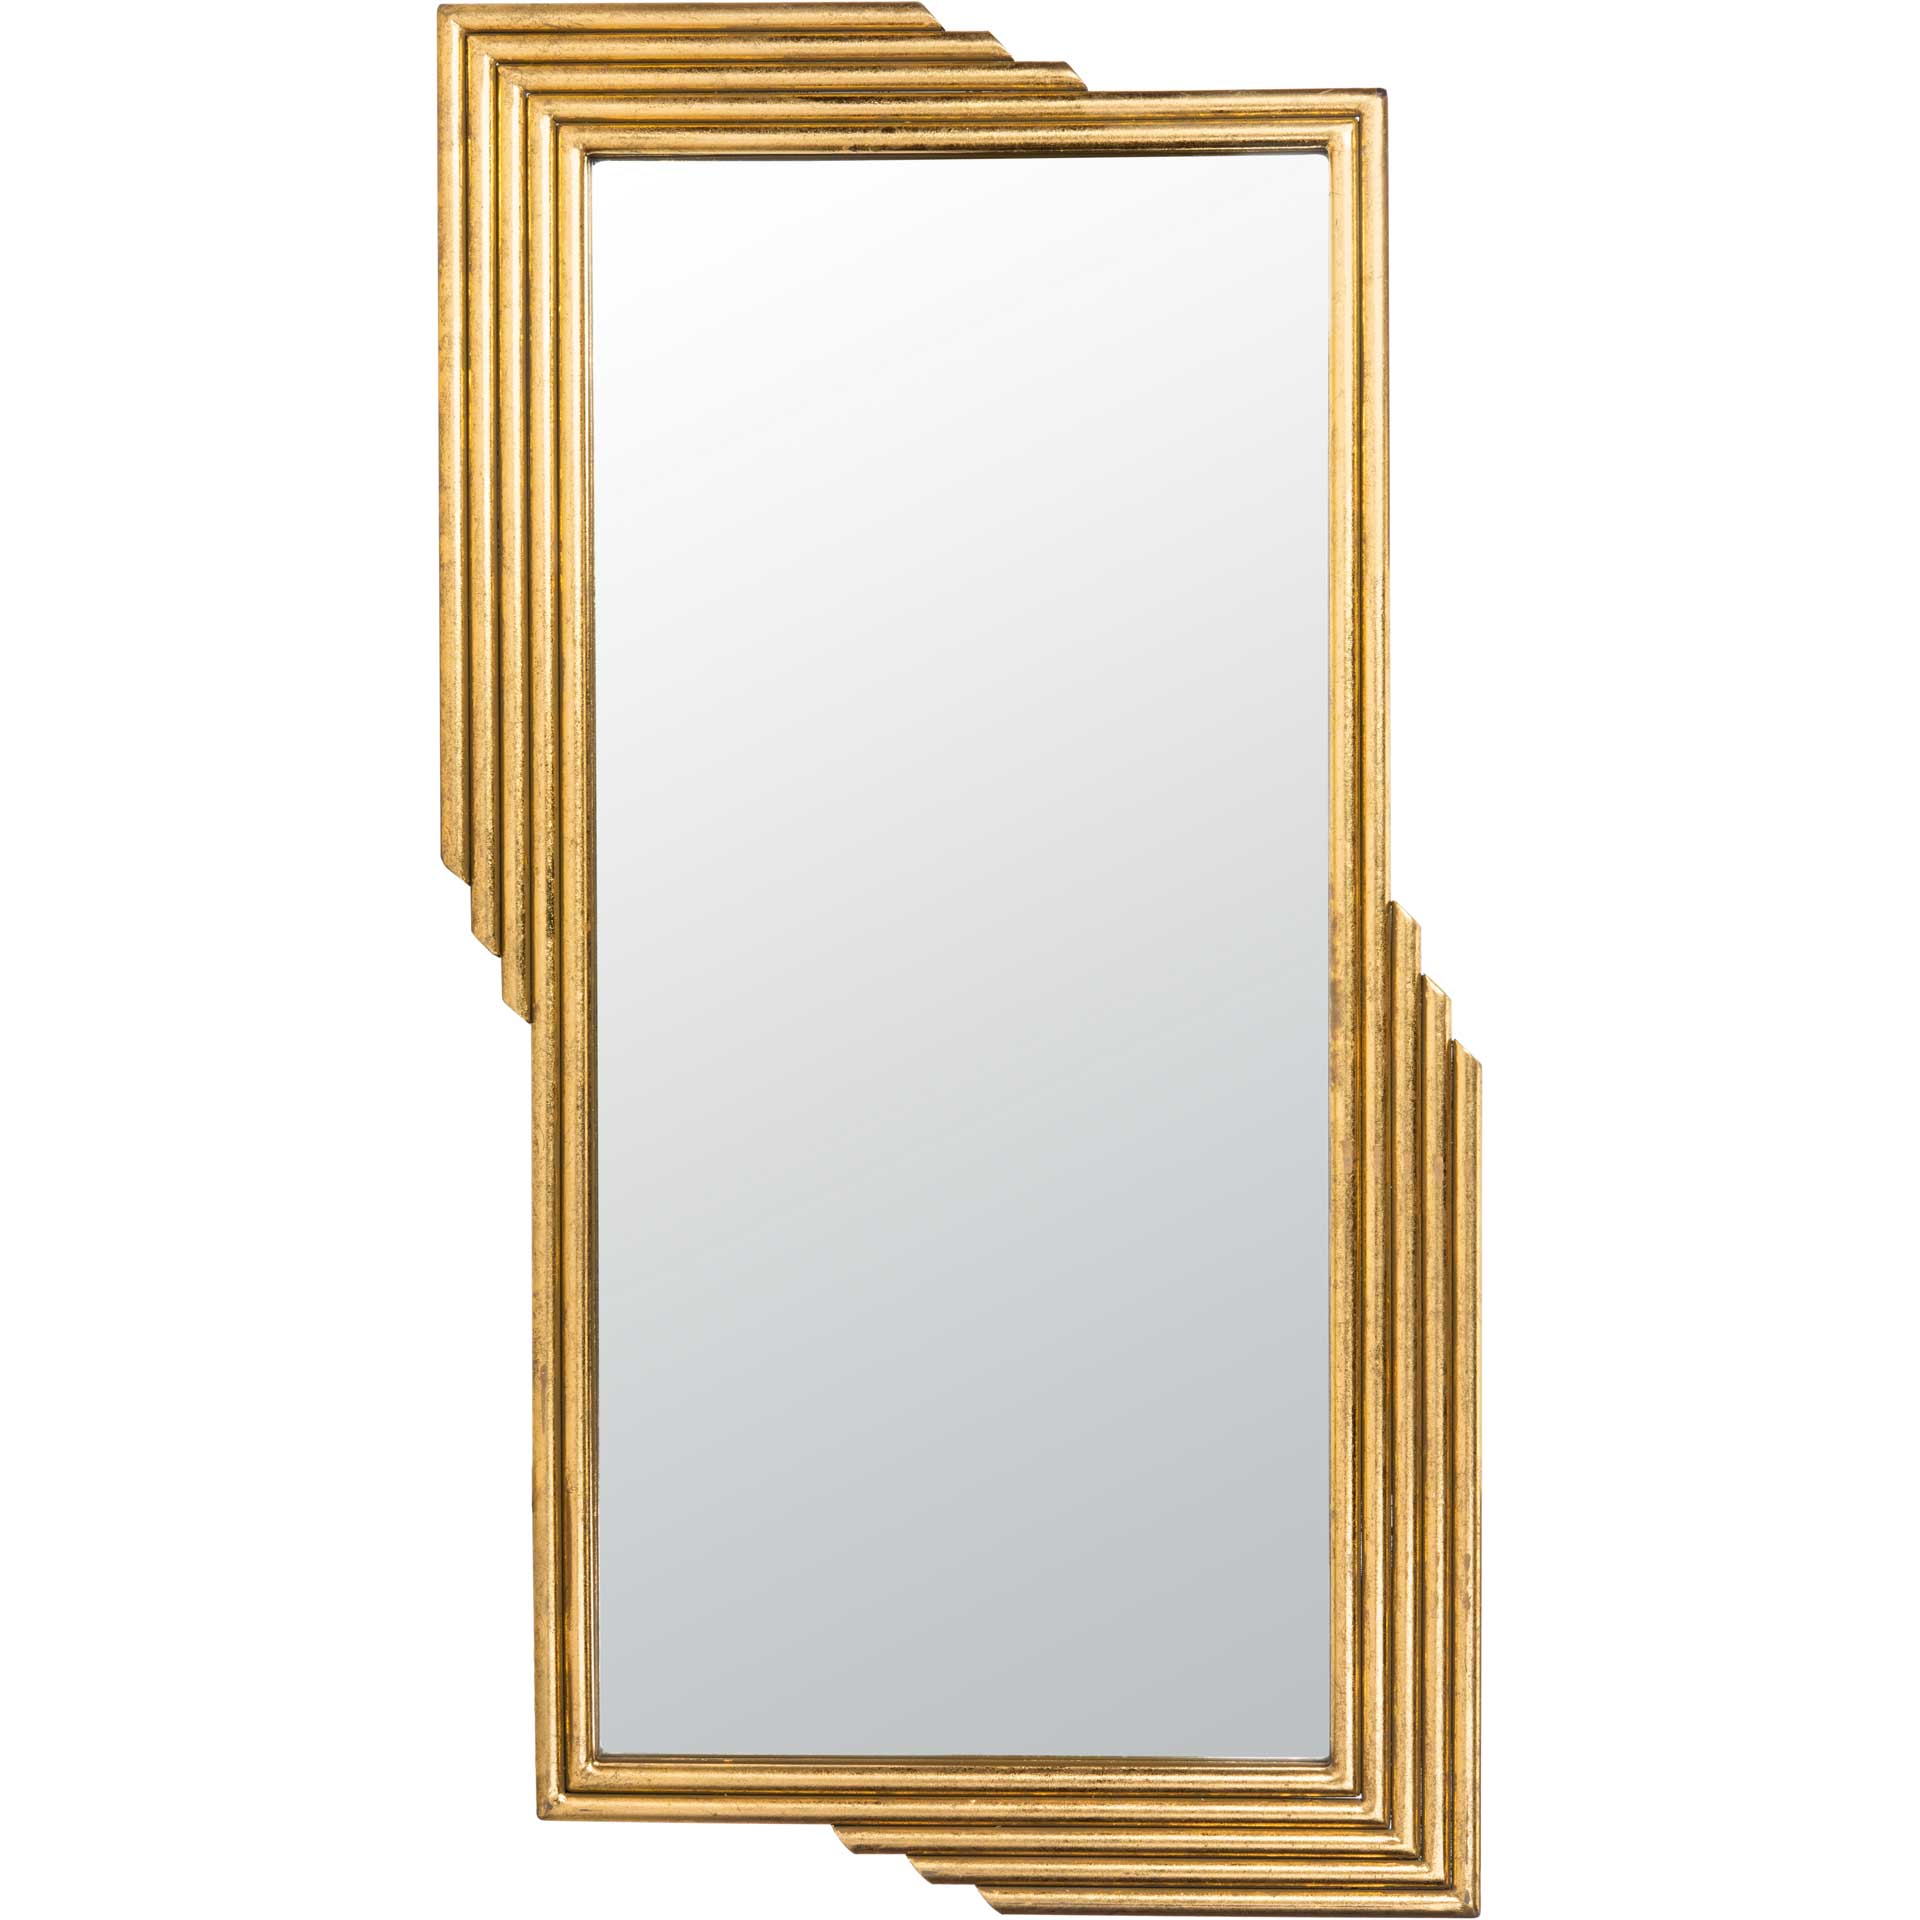 Transmit Mirror Gold Foil